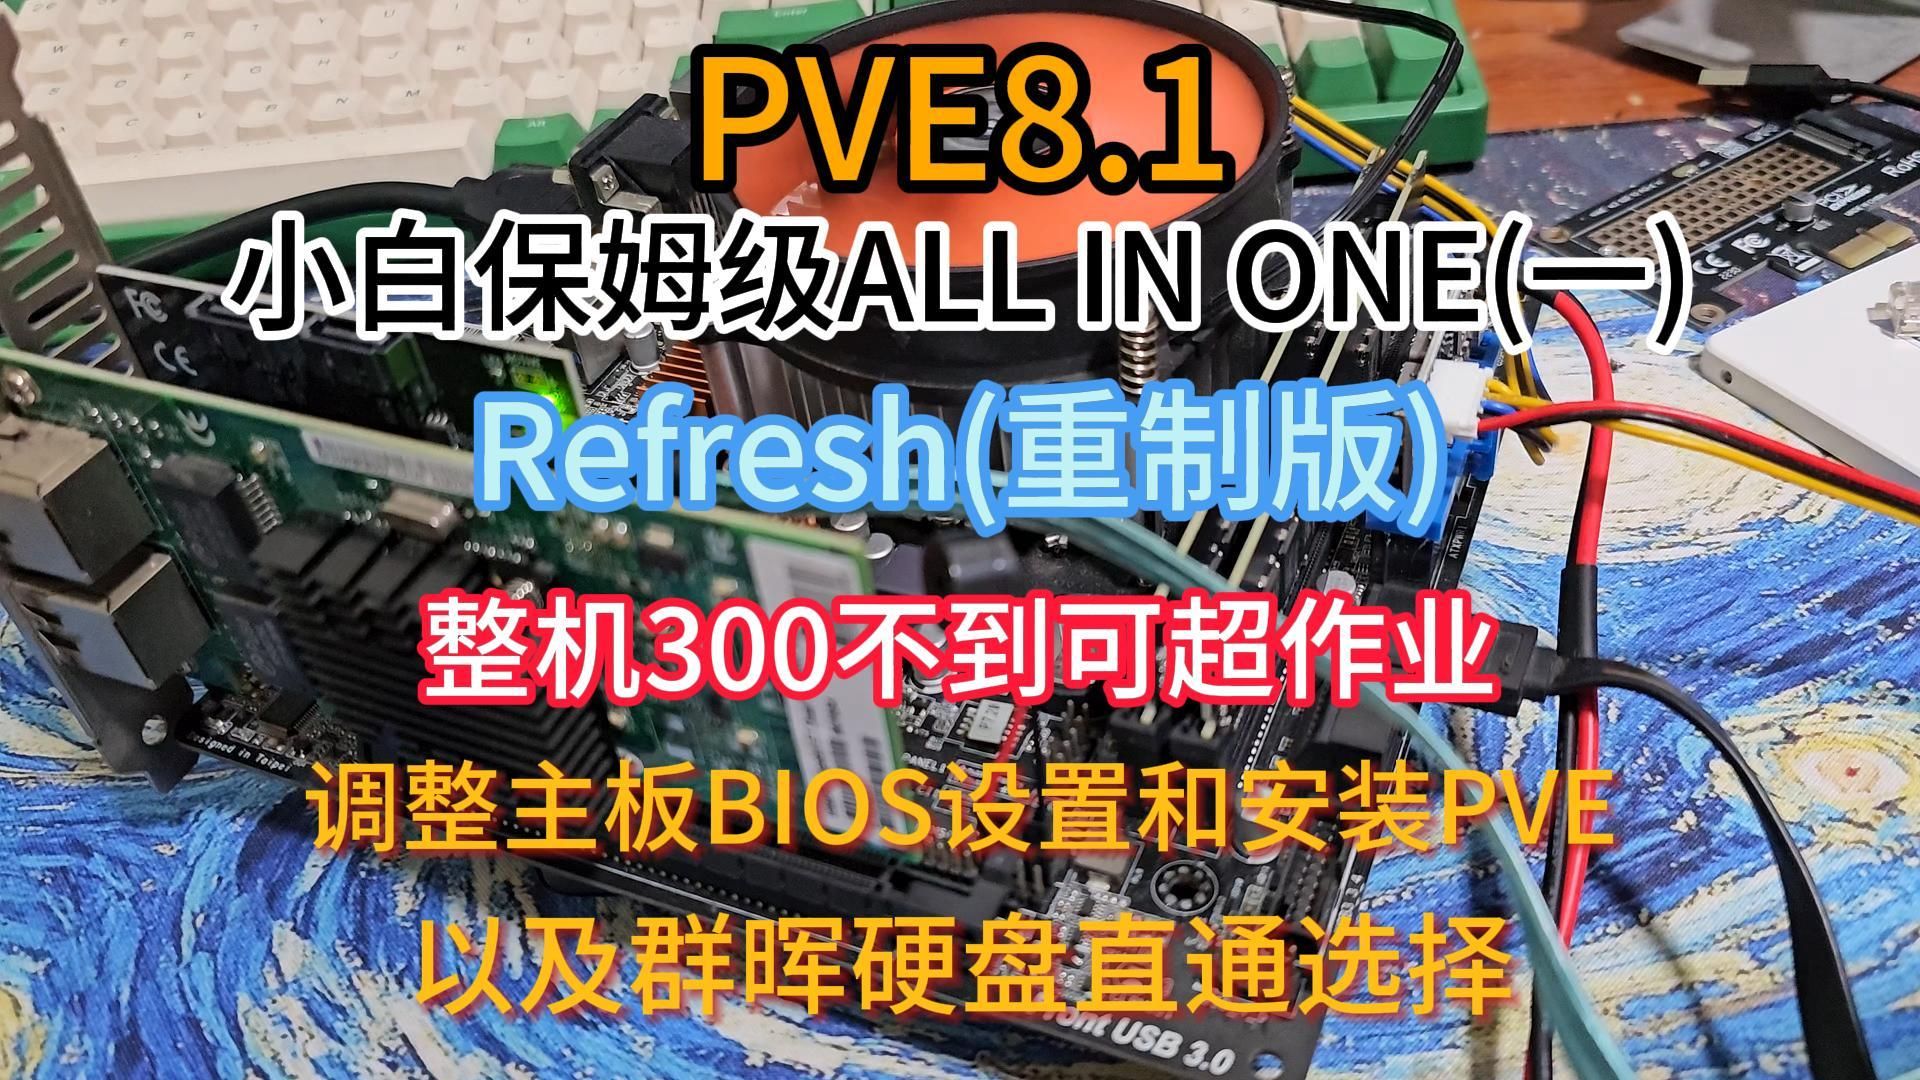 PVE8.1 小白ALL IN ONE安装教程 Refresh-小陈折腾日记